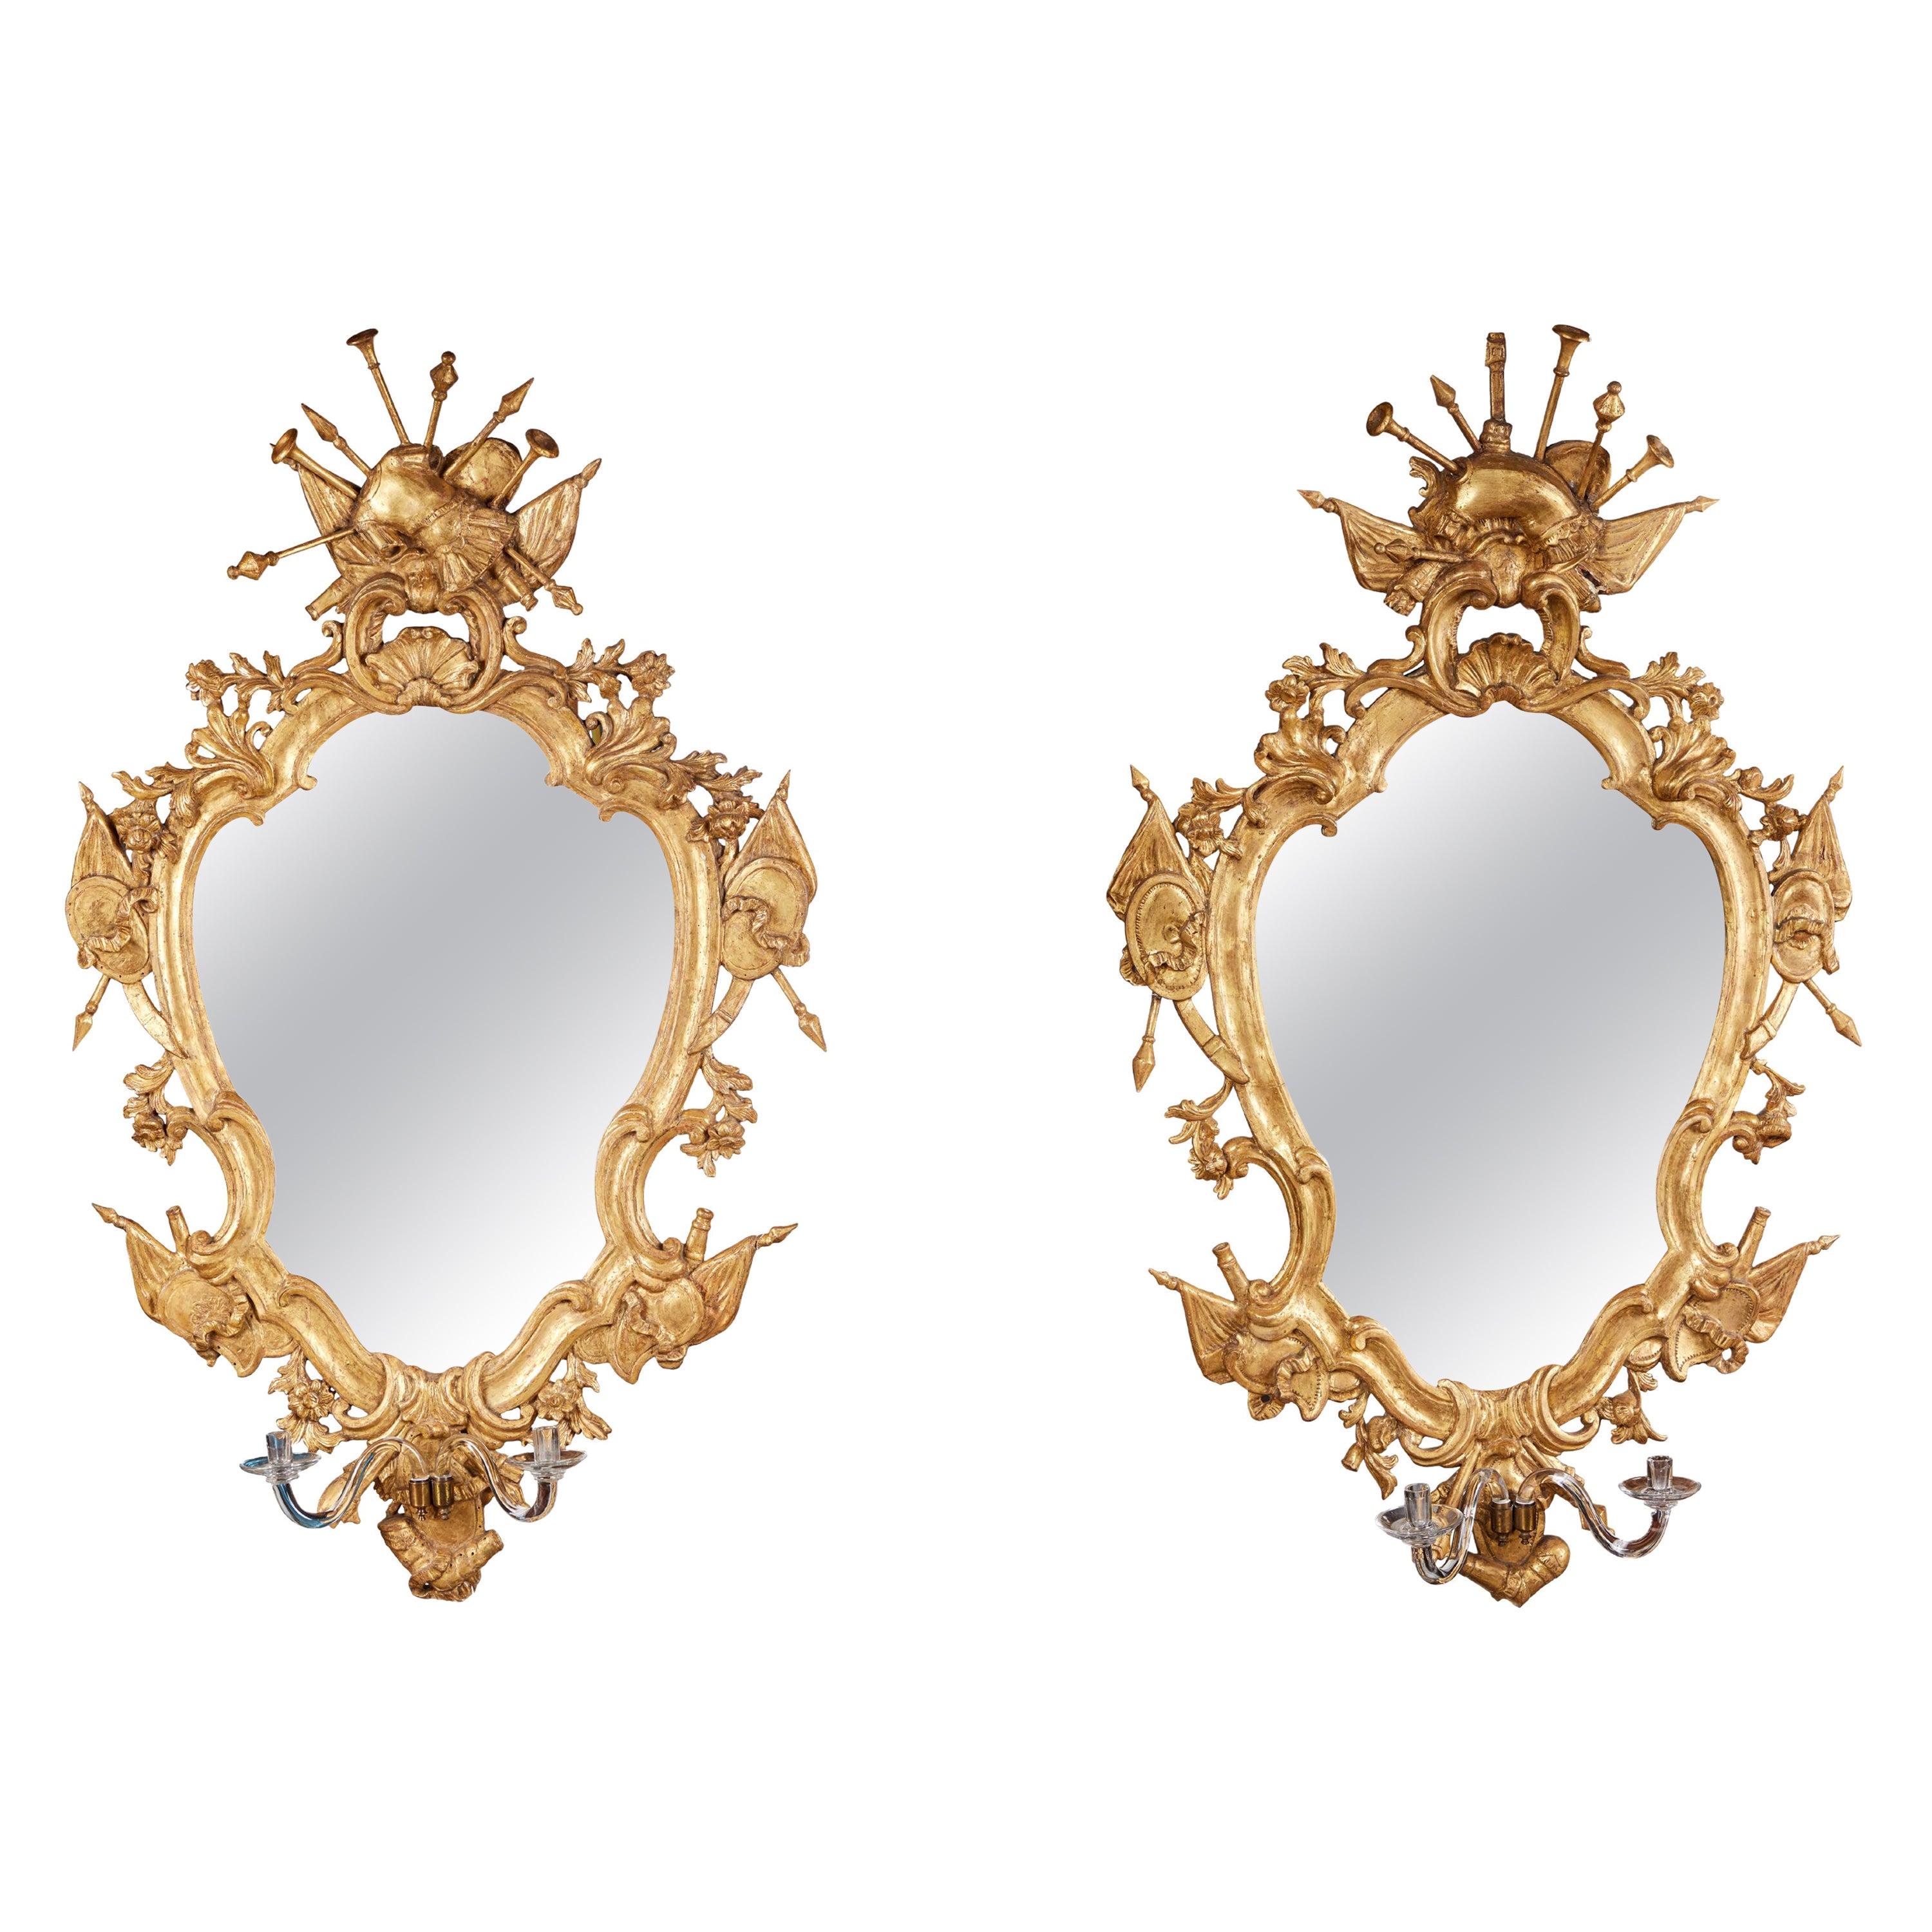 Exceptional Pair of 18th Century Girandole Mirrors